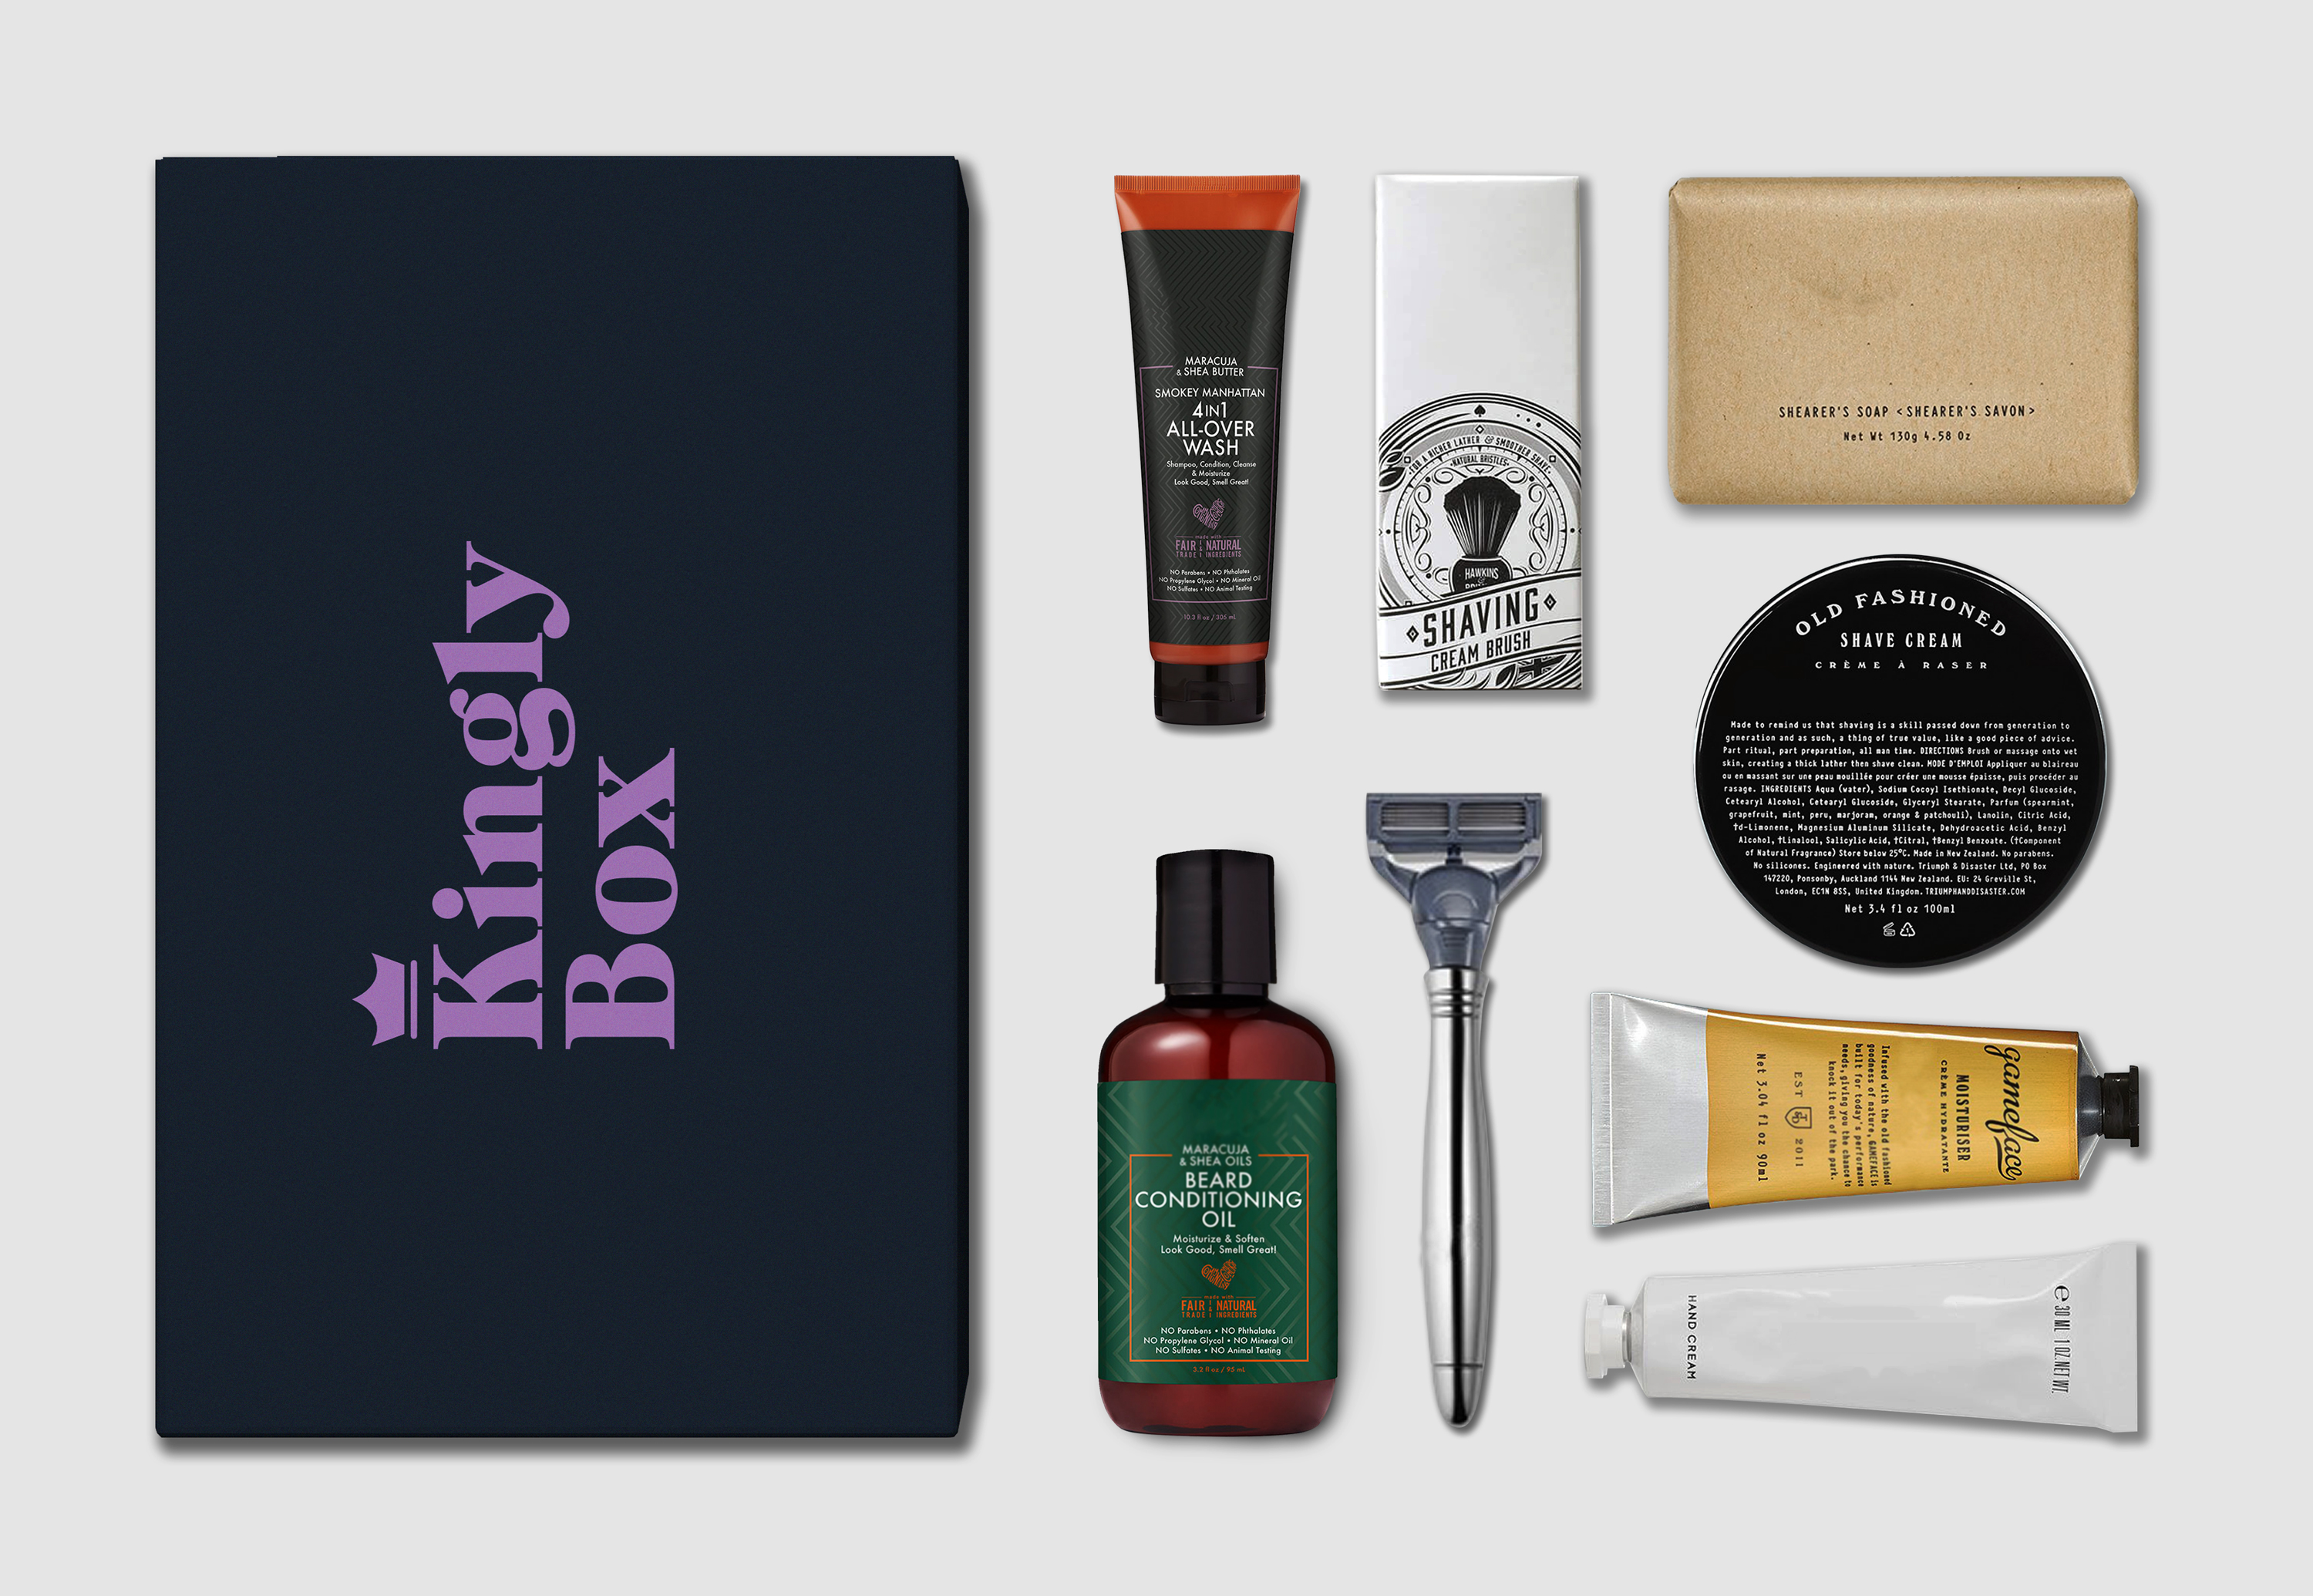 Kingly Box Product Image 2